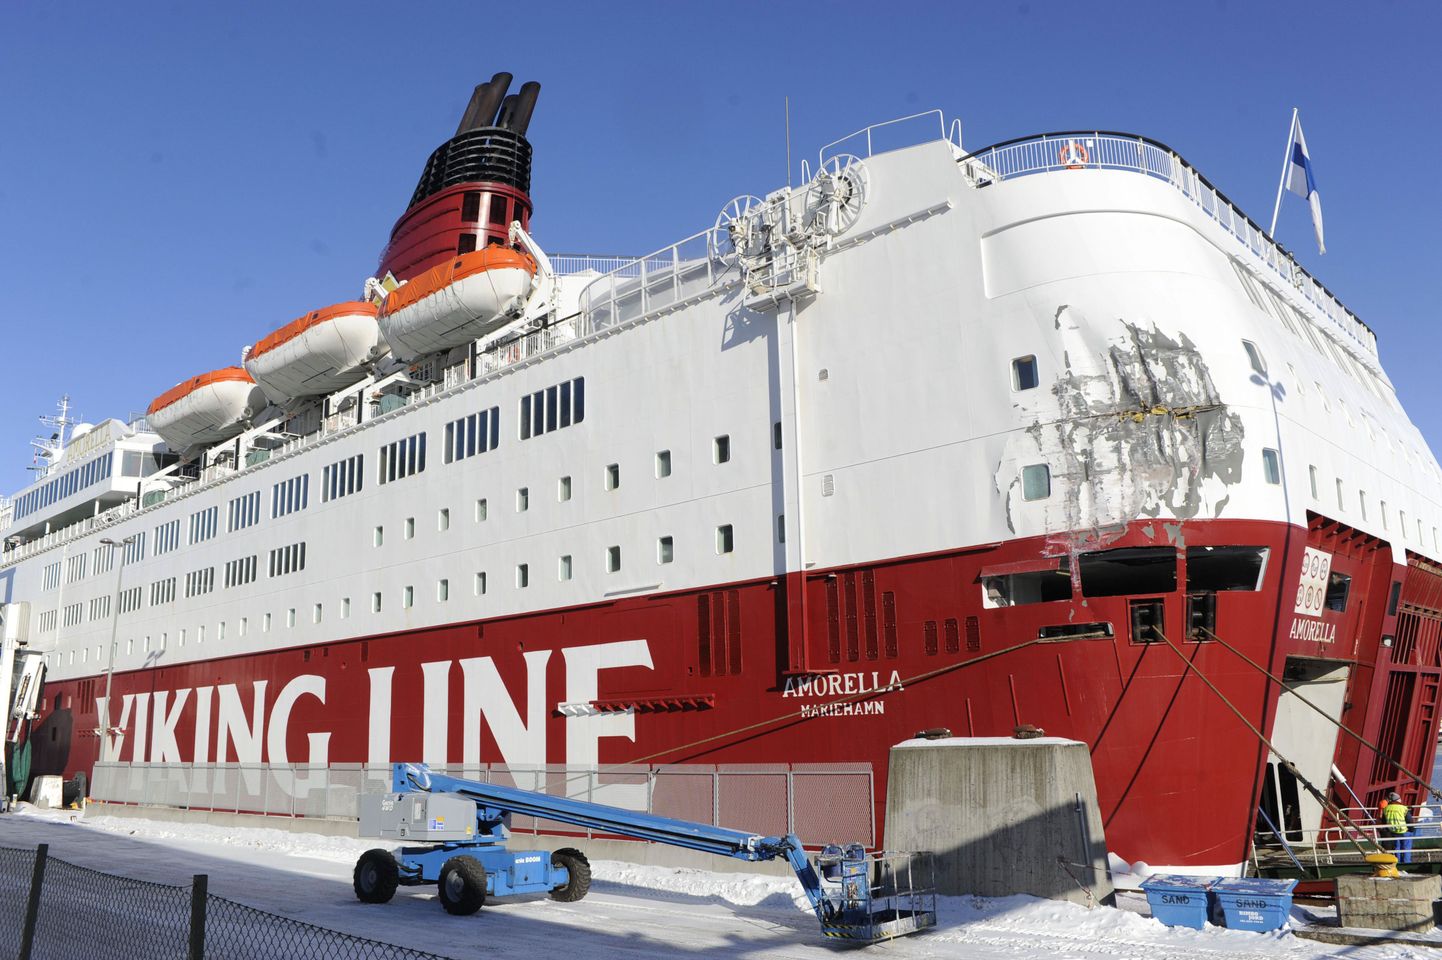 Viking Line'i reisiparvlaev Amorella Stockholmi sadamas.